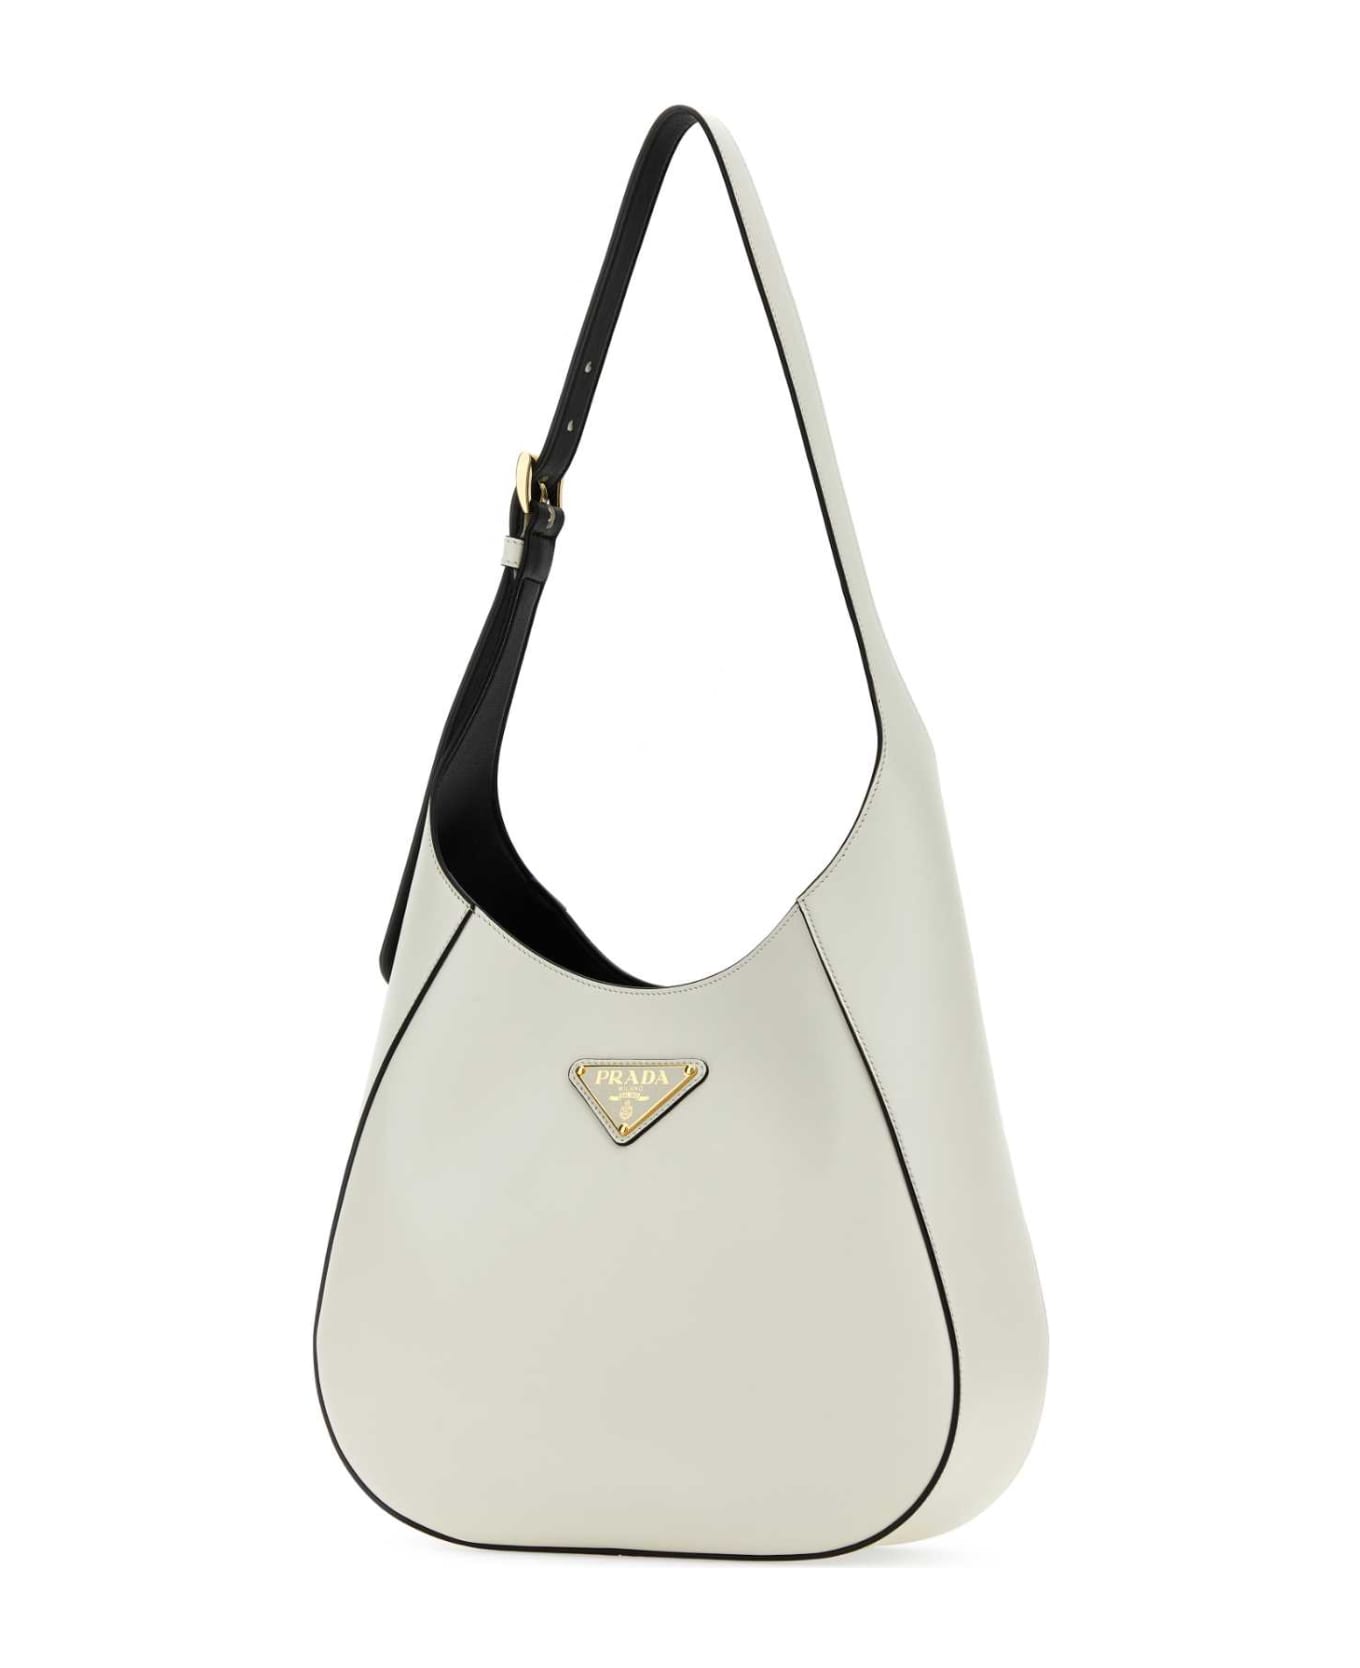 Prada White Leather Shoulder Bag - BIANCONERO トートバッグ